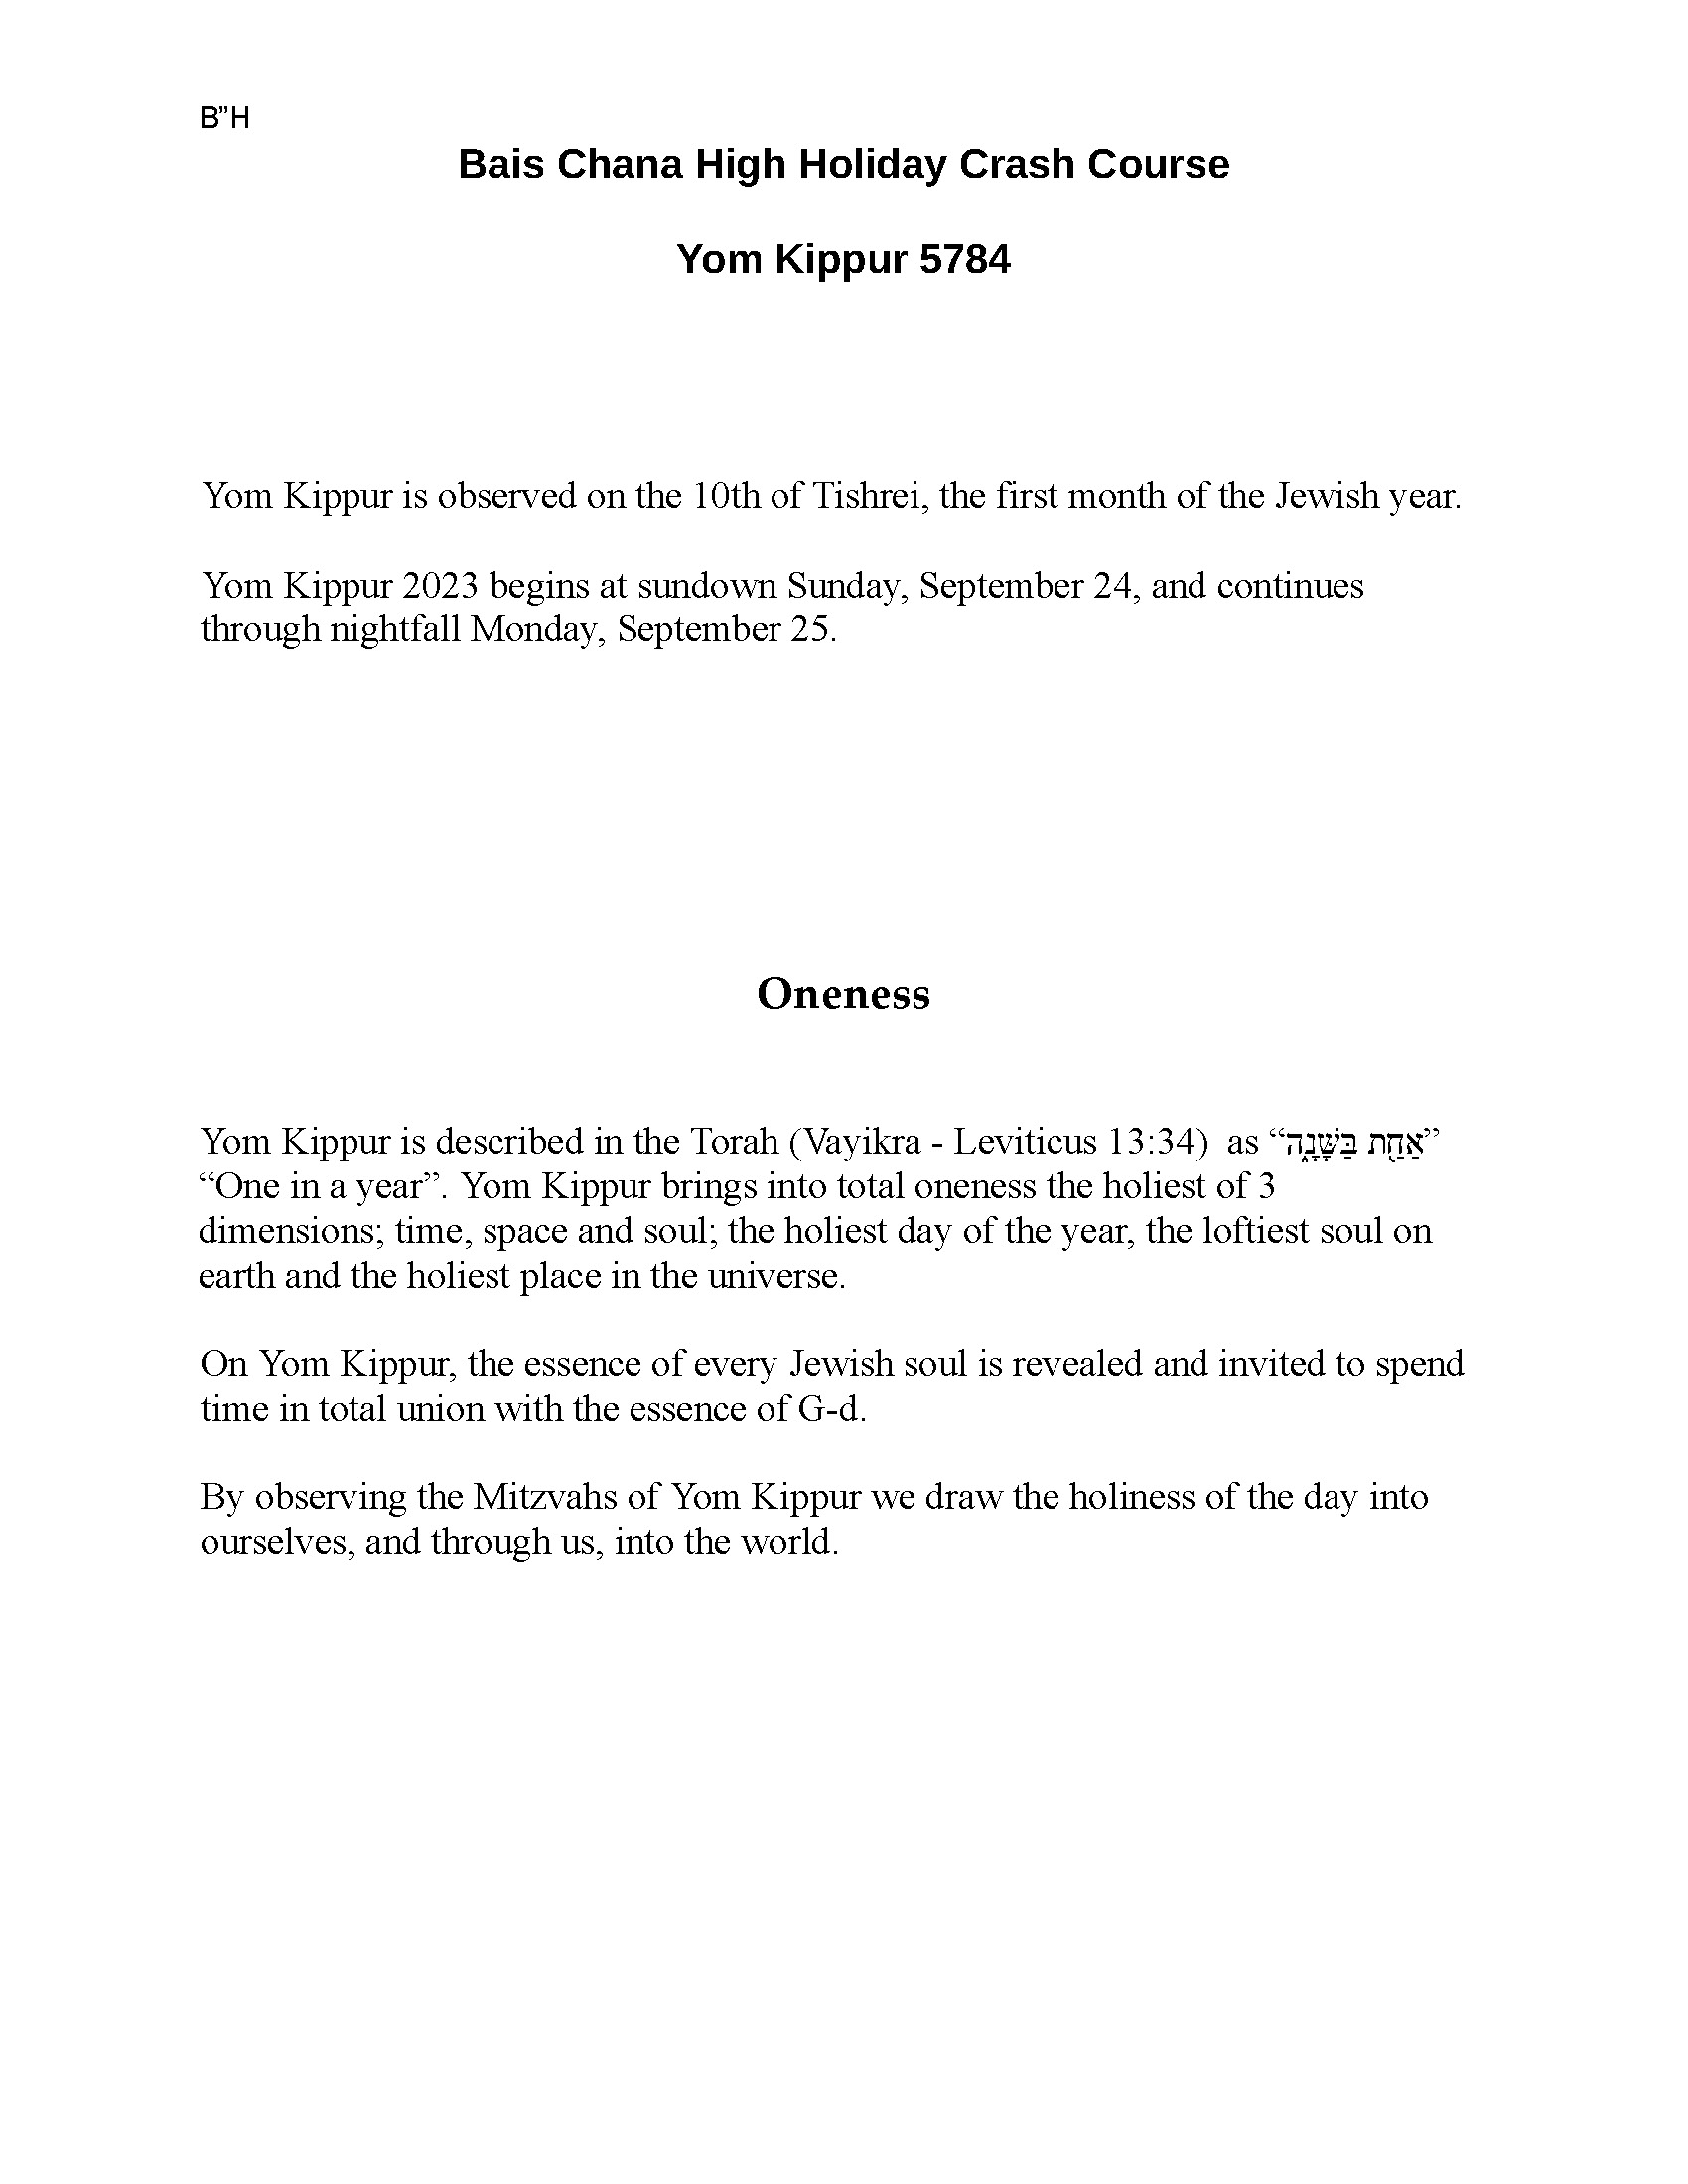 High Holidays 5784 - Yom Kippur crash course_Page_01